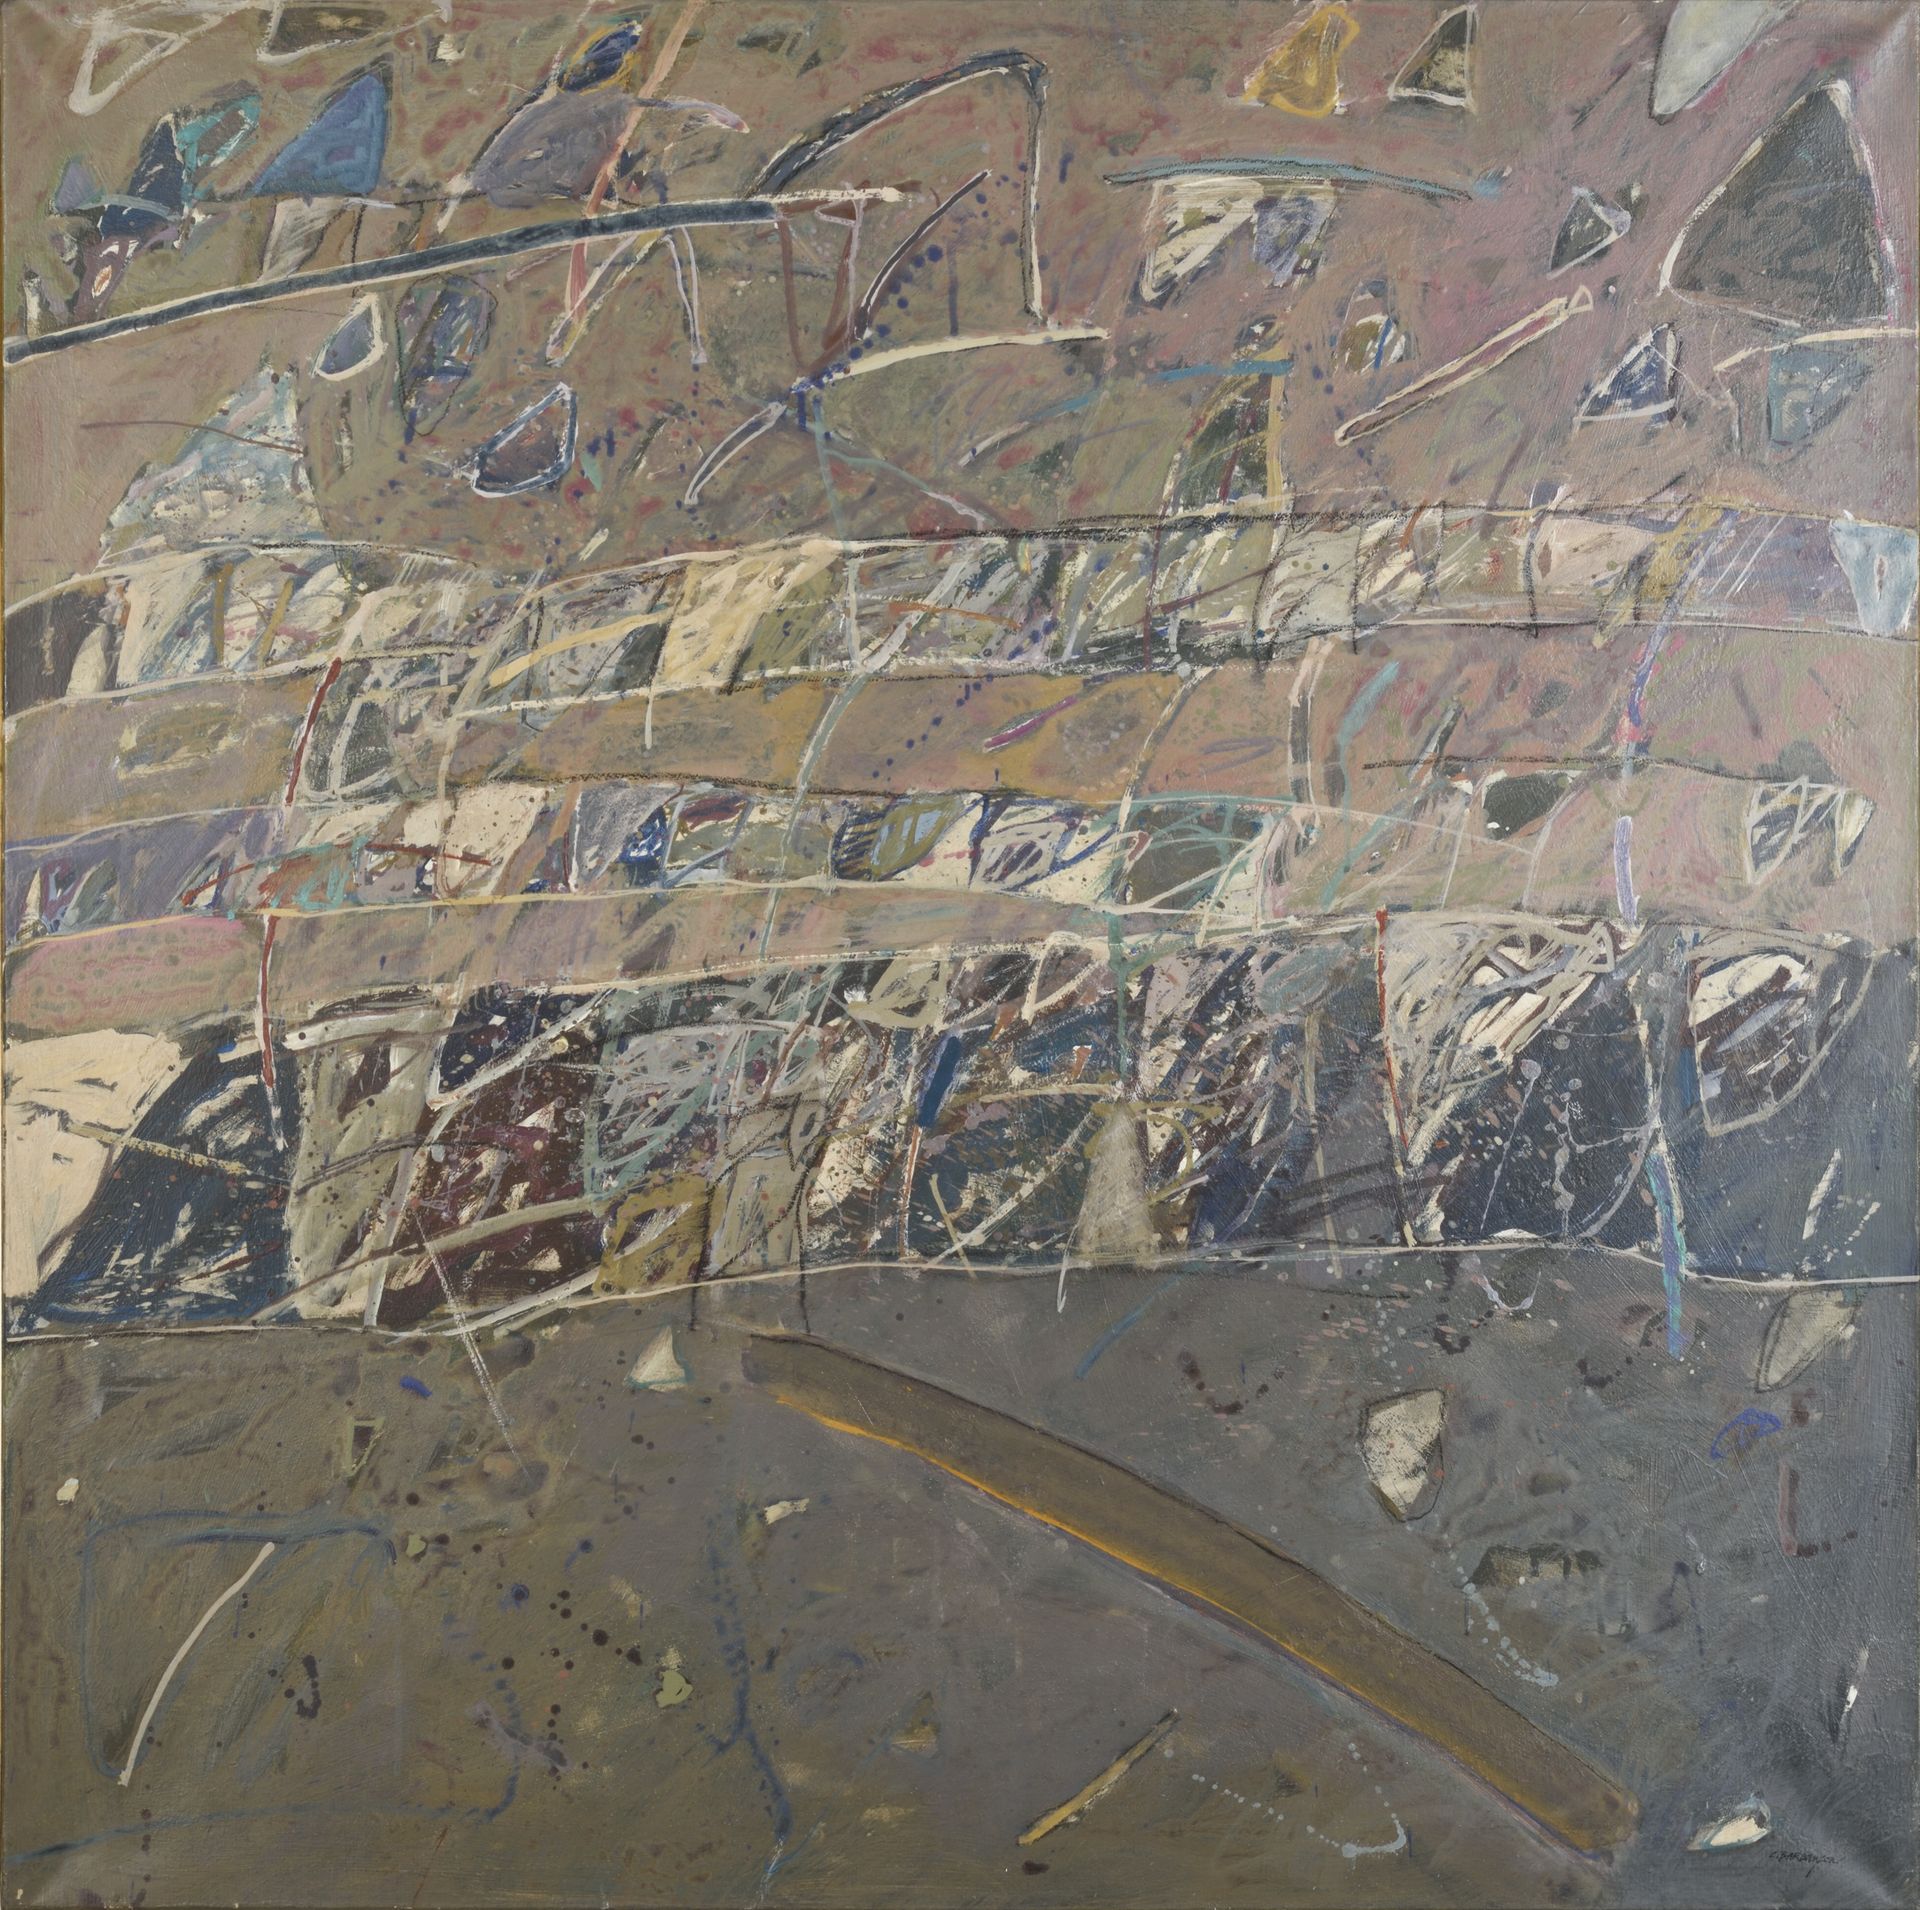 Christian BARBANCON (1940-1993) 克里斯蒂安-巴班康(1940-1993)

无标题

布面油画，右下方有签名，背面有会签。

1&hellip;